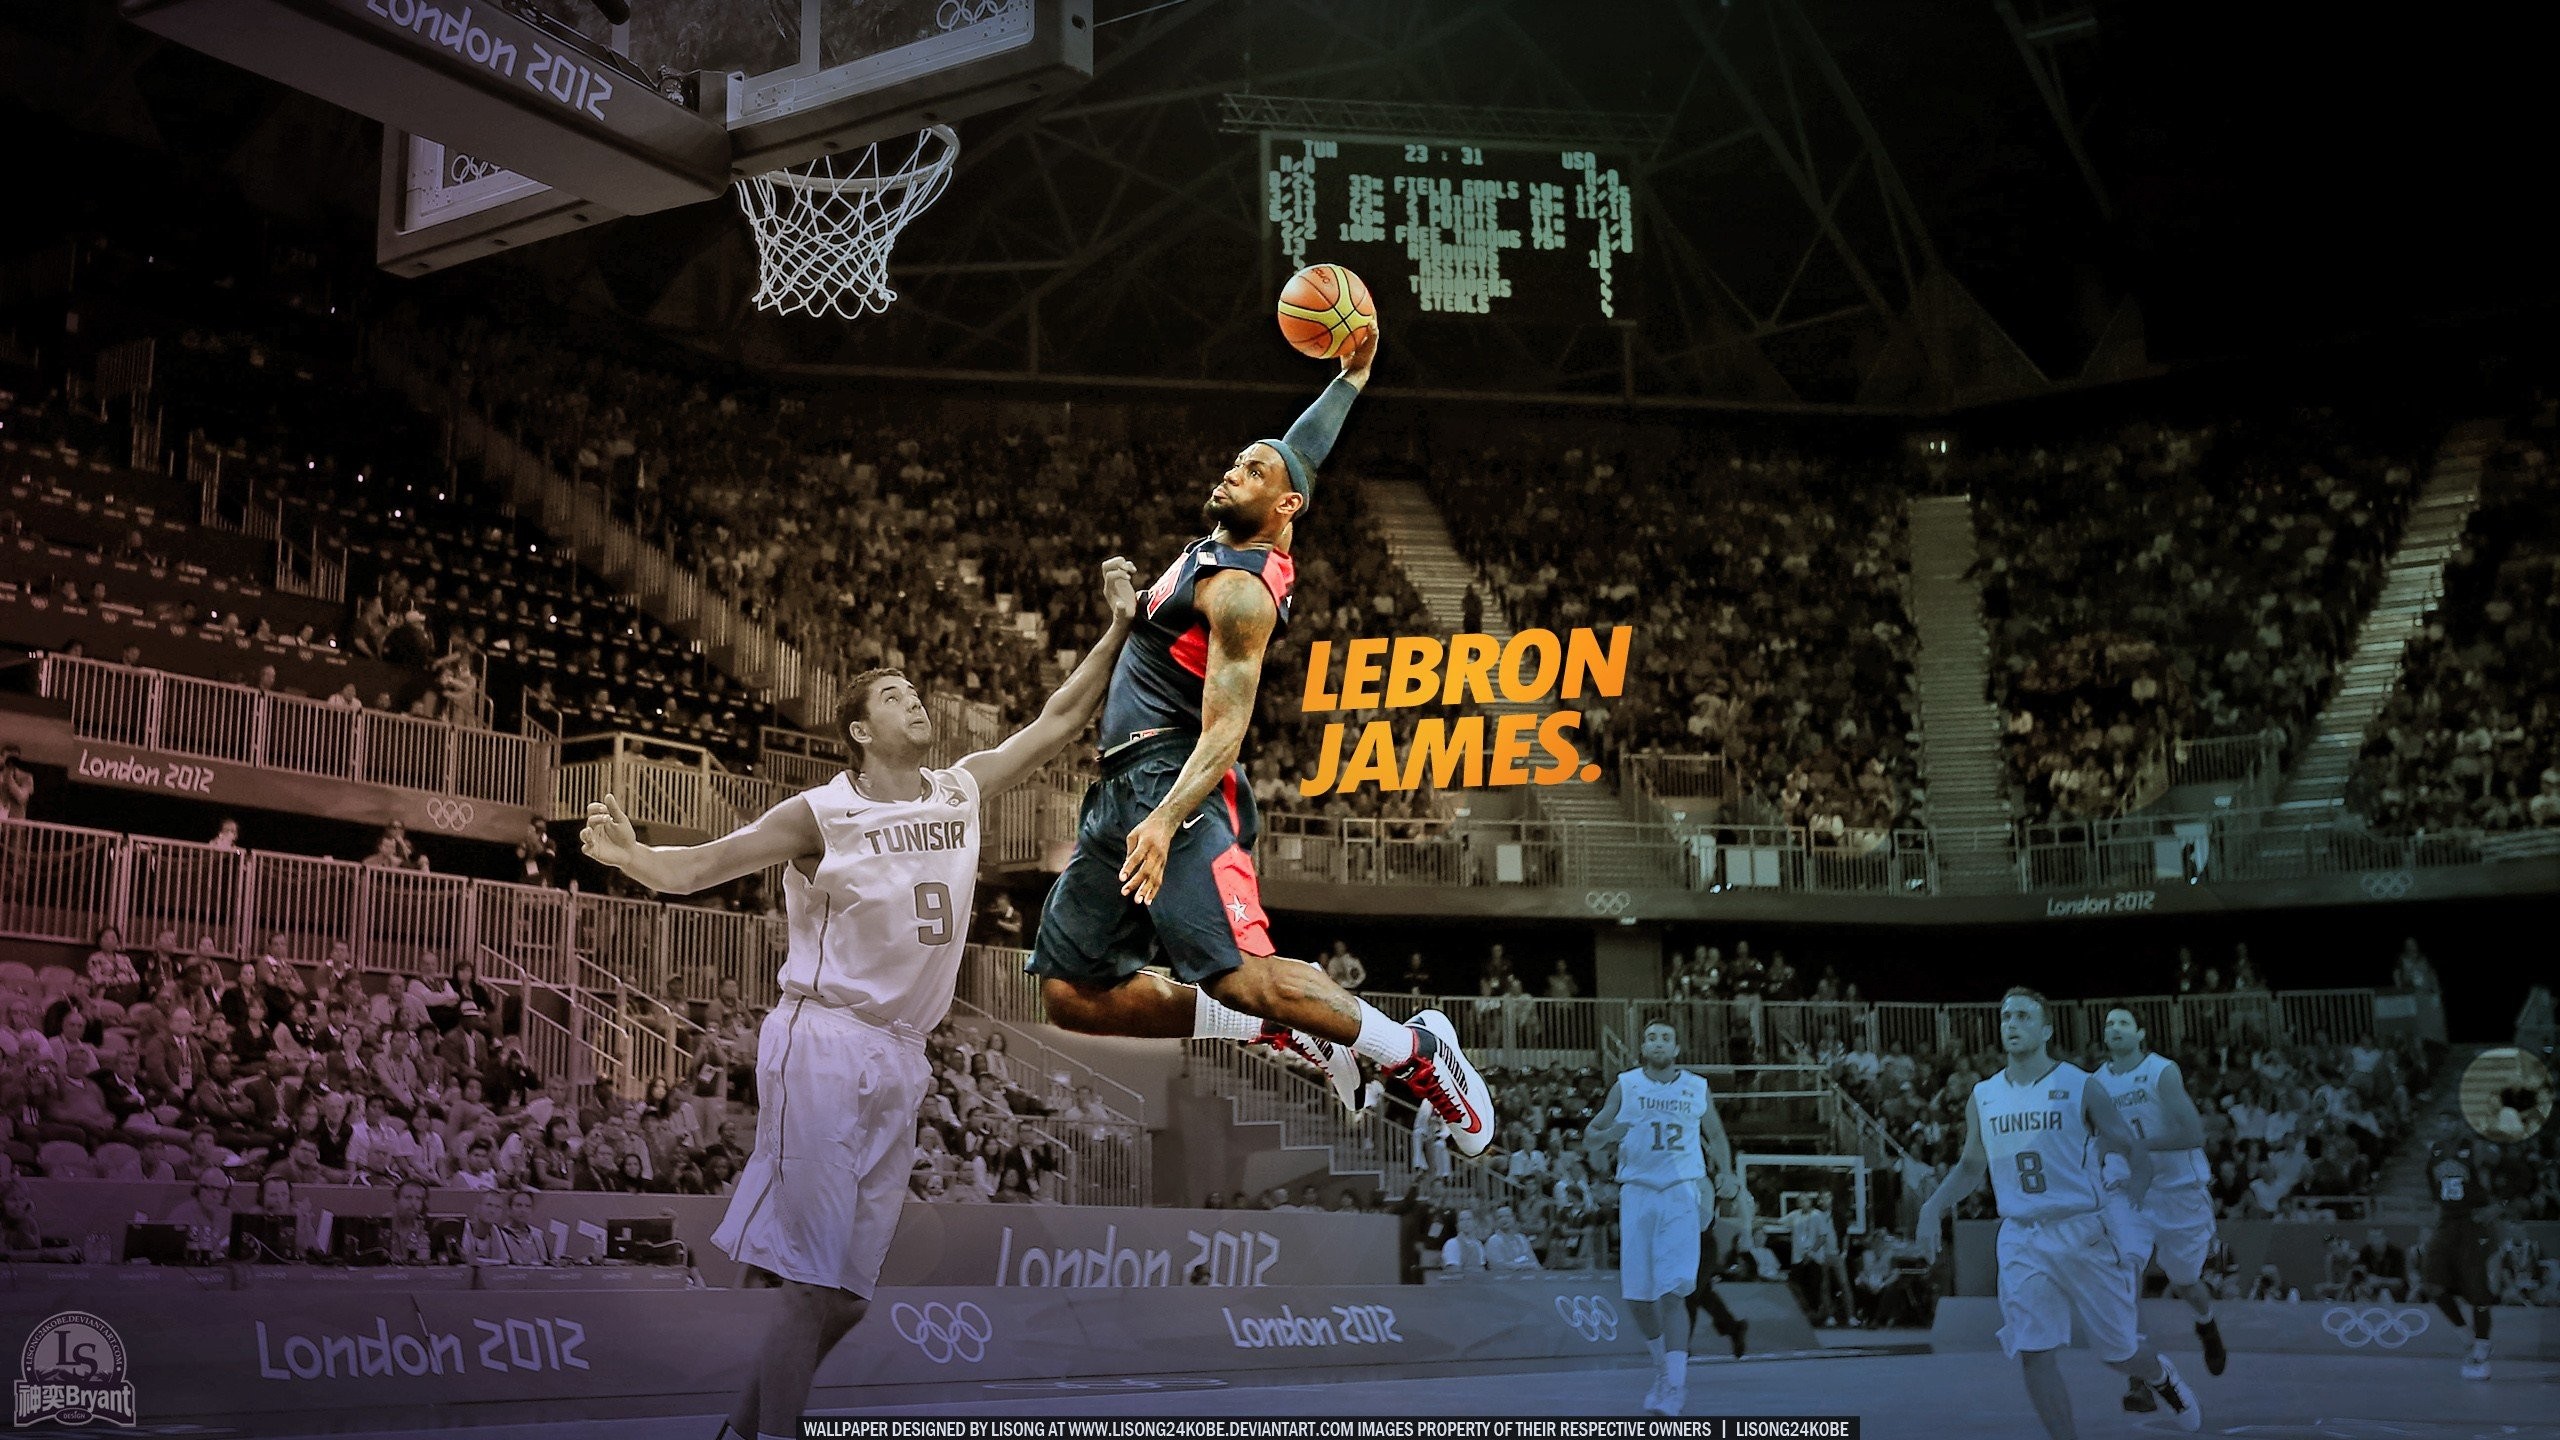 2560x1440 NBA Lebron James dunk basketball player wallpaper background